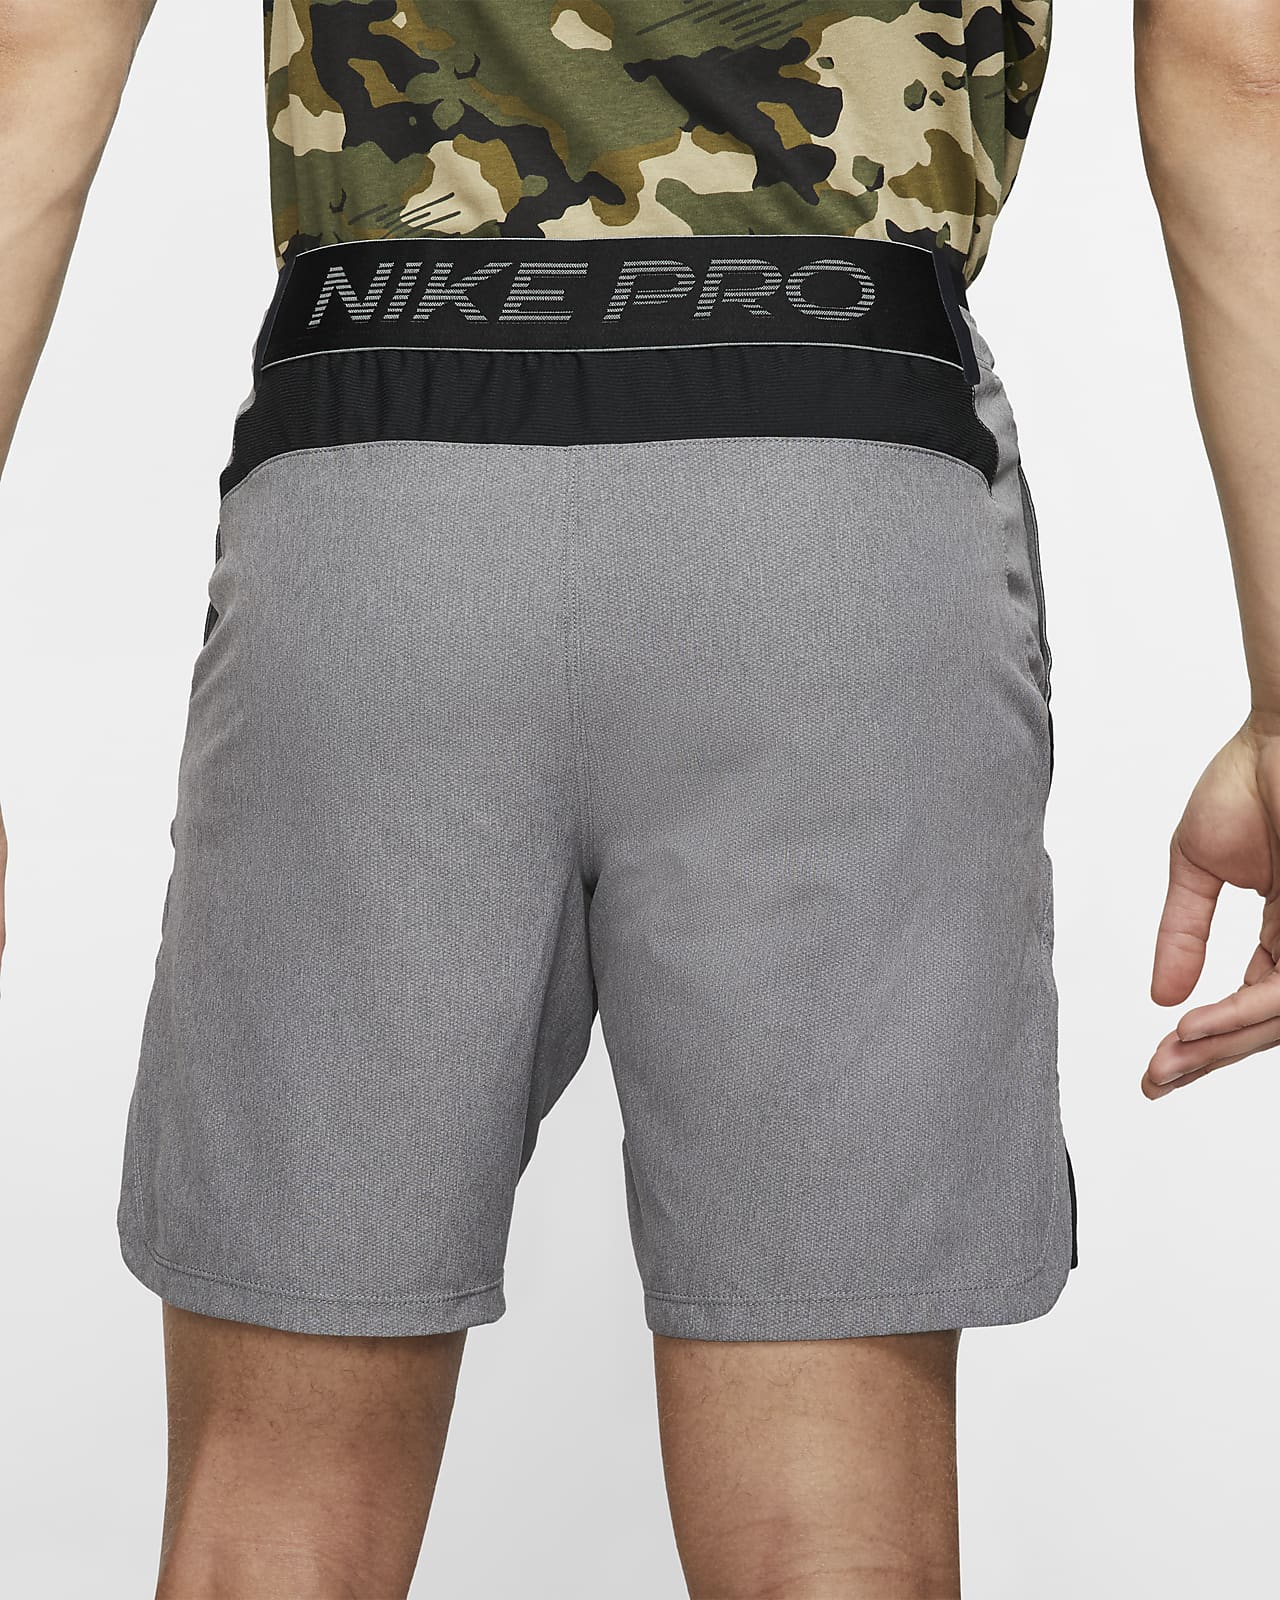 nike pro cross shorts